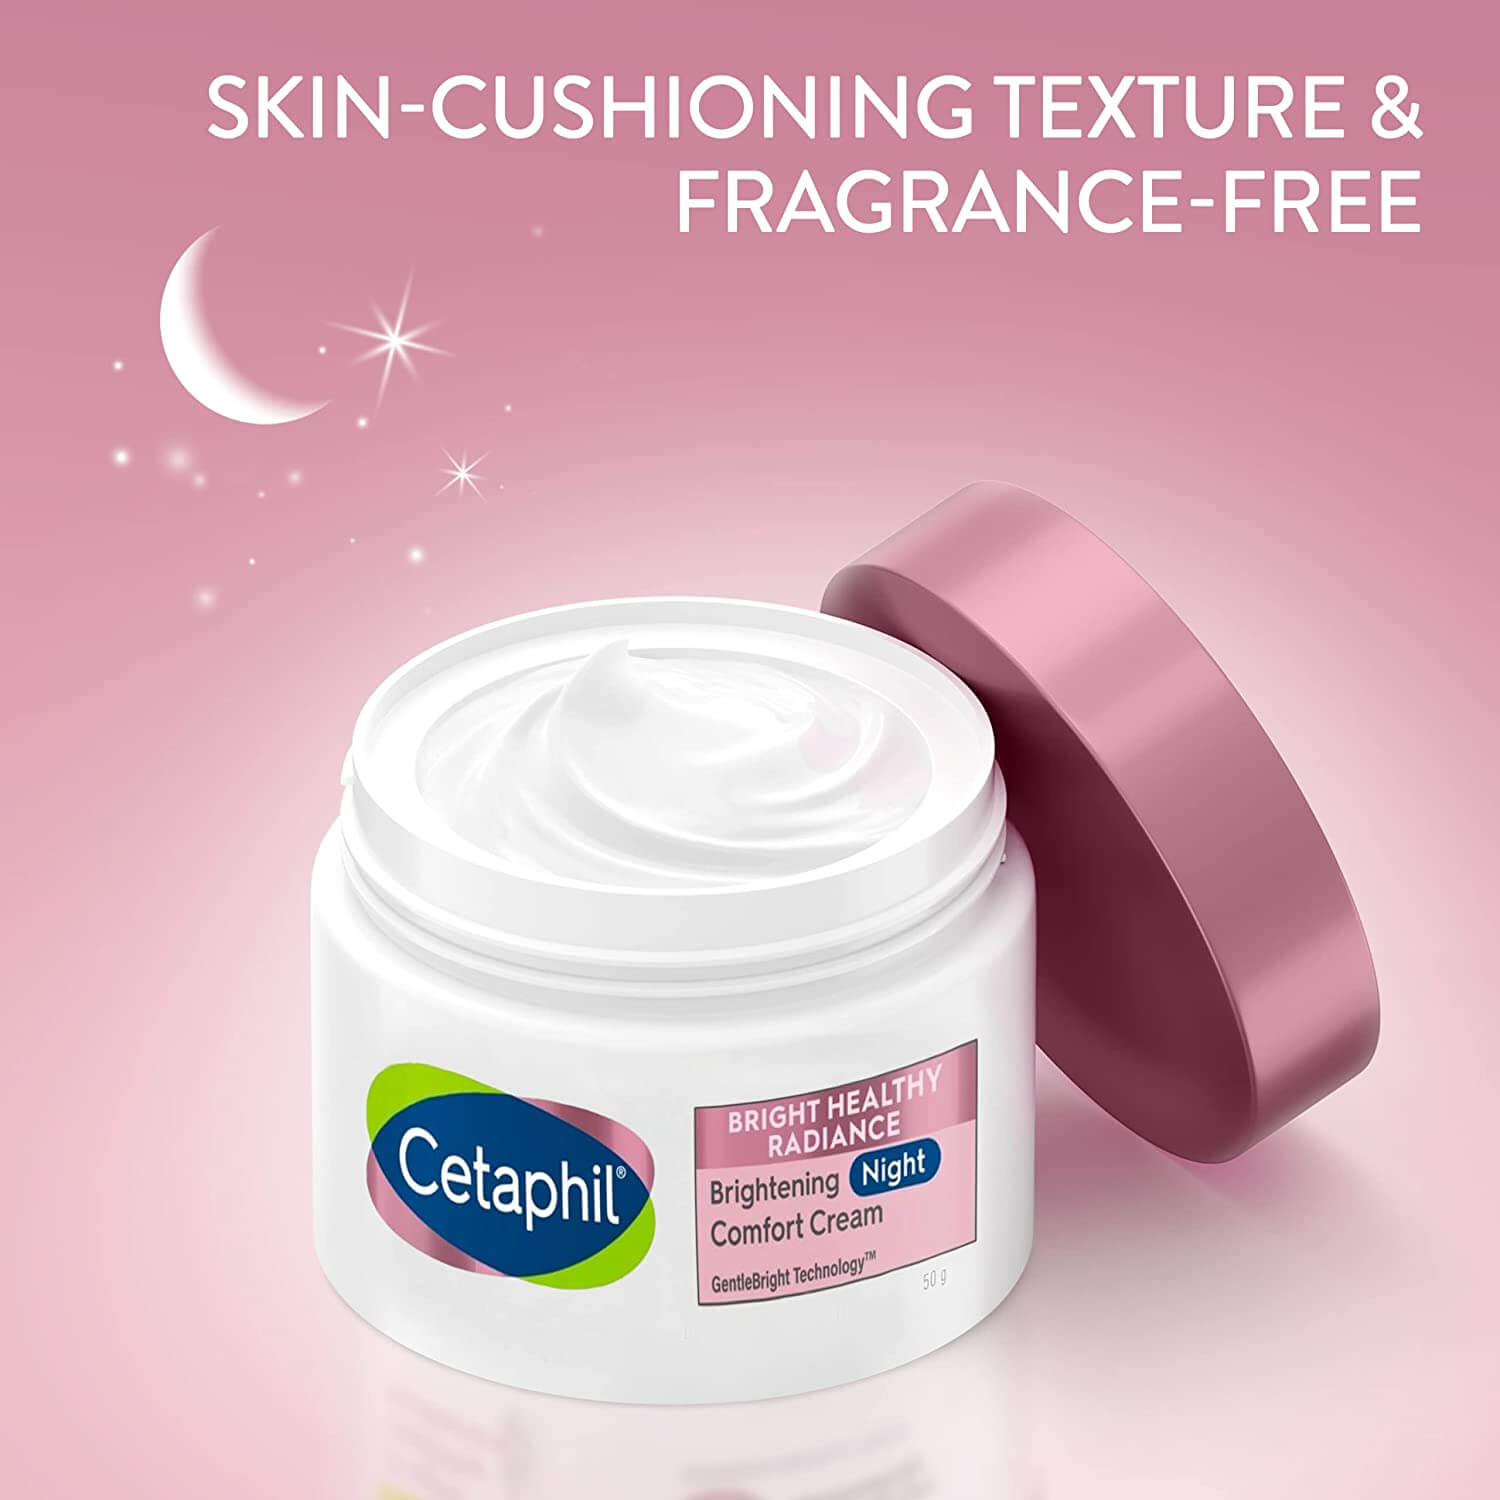 CETAPHIL Brightening Night Comfort Cream instantly hydrates and illuminates dry, sensitive skin